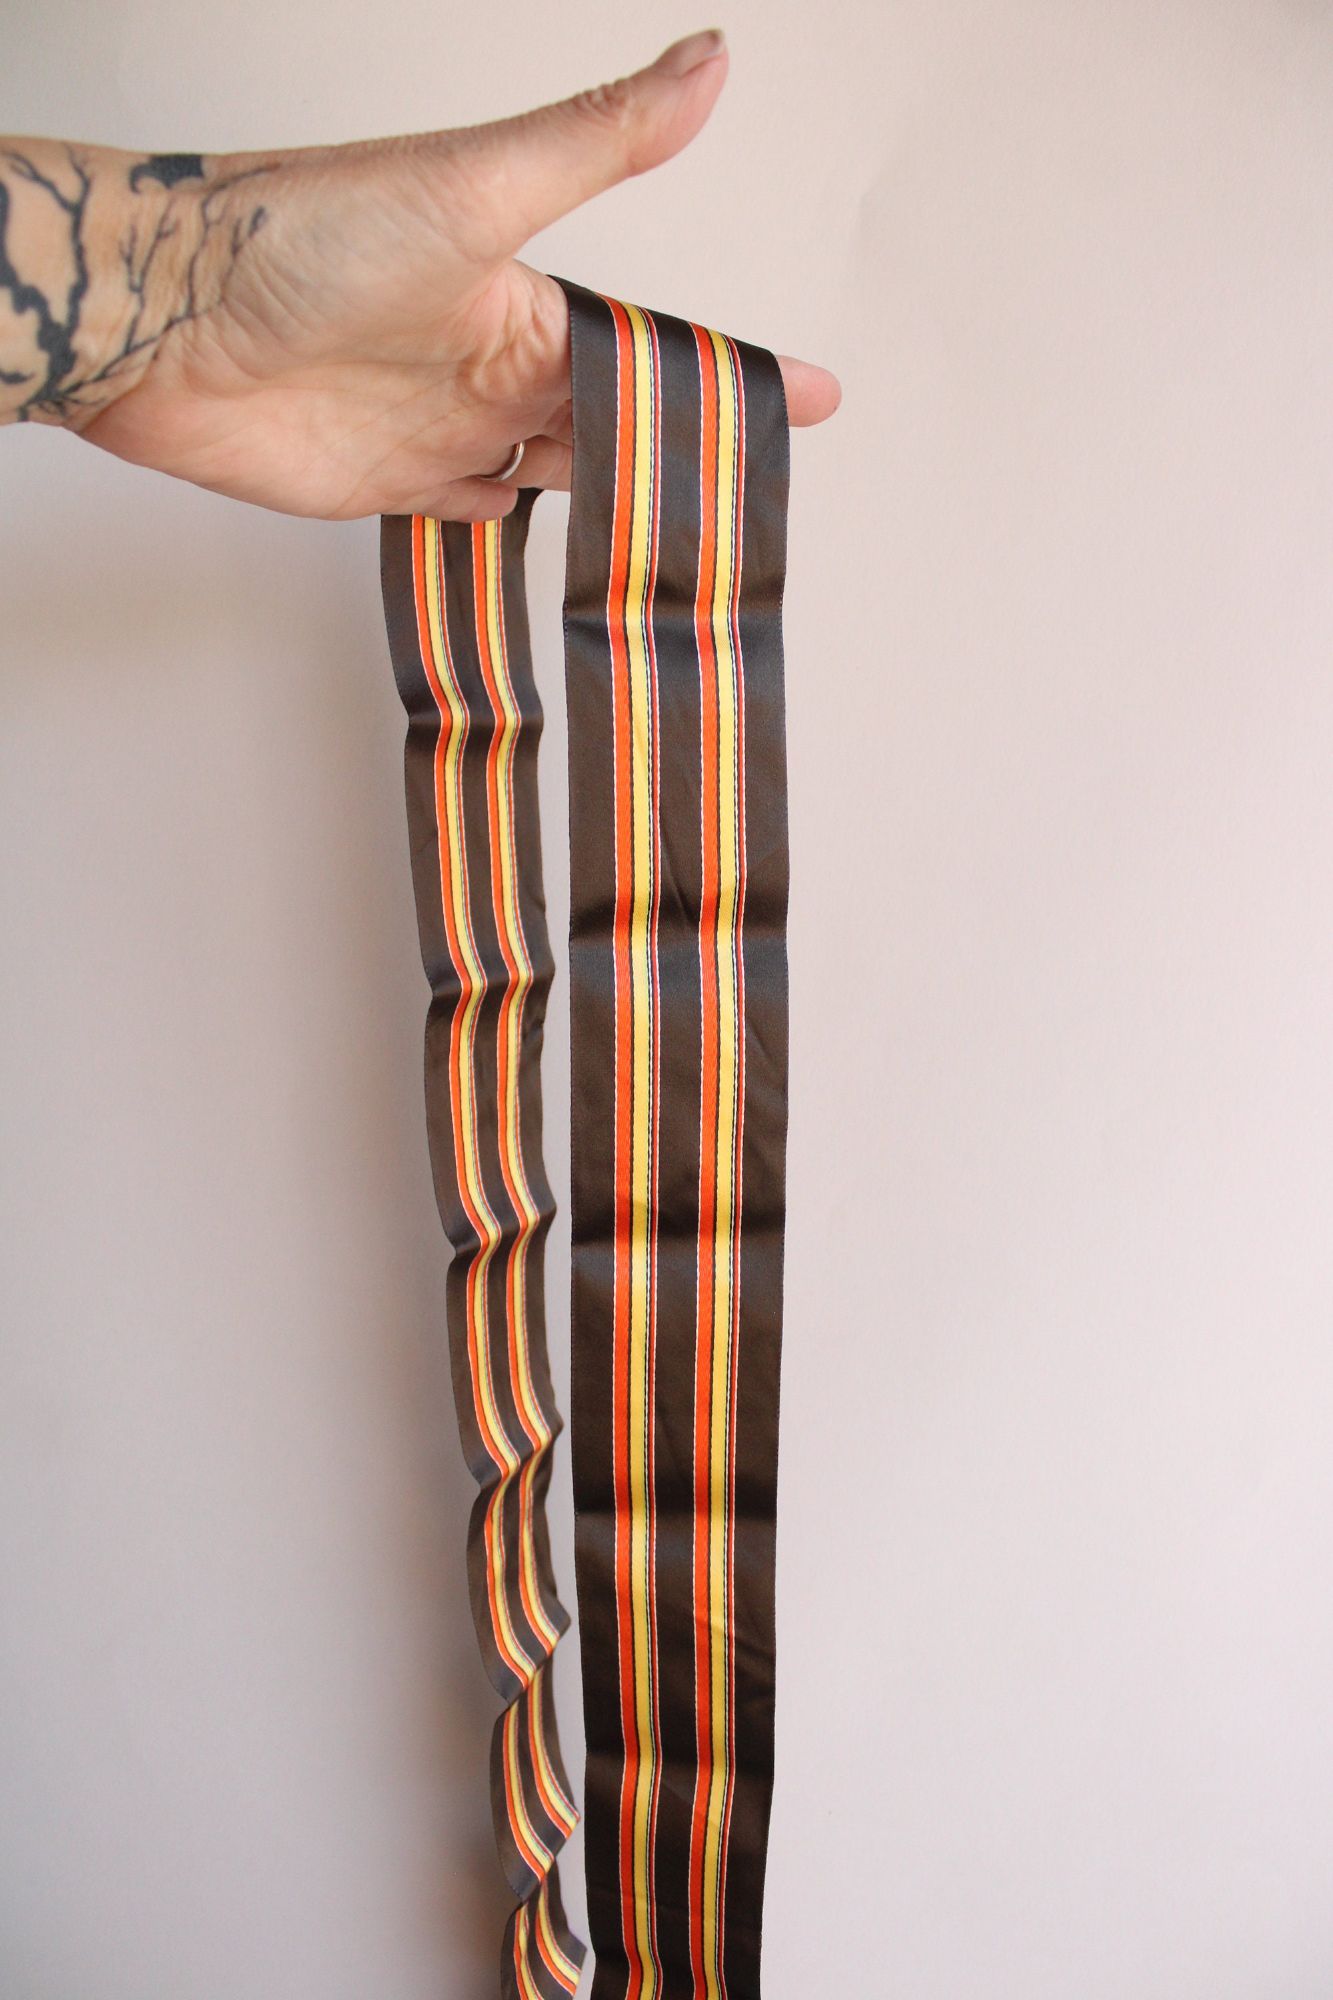 Vintage  Ribbon Trim, Brown, Orange Yellow Striped, 3 yards long, 2 Inch Wide